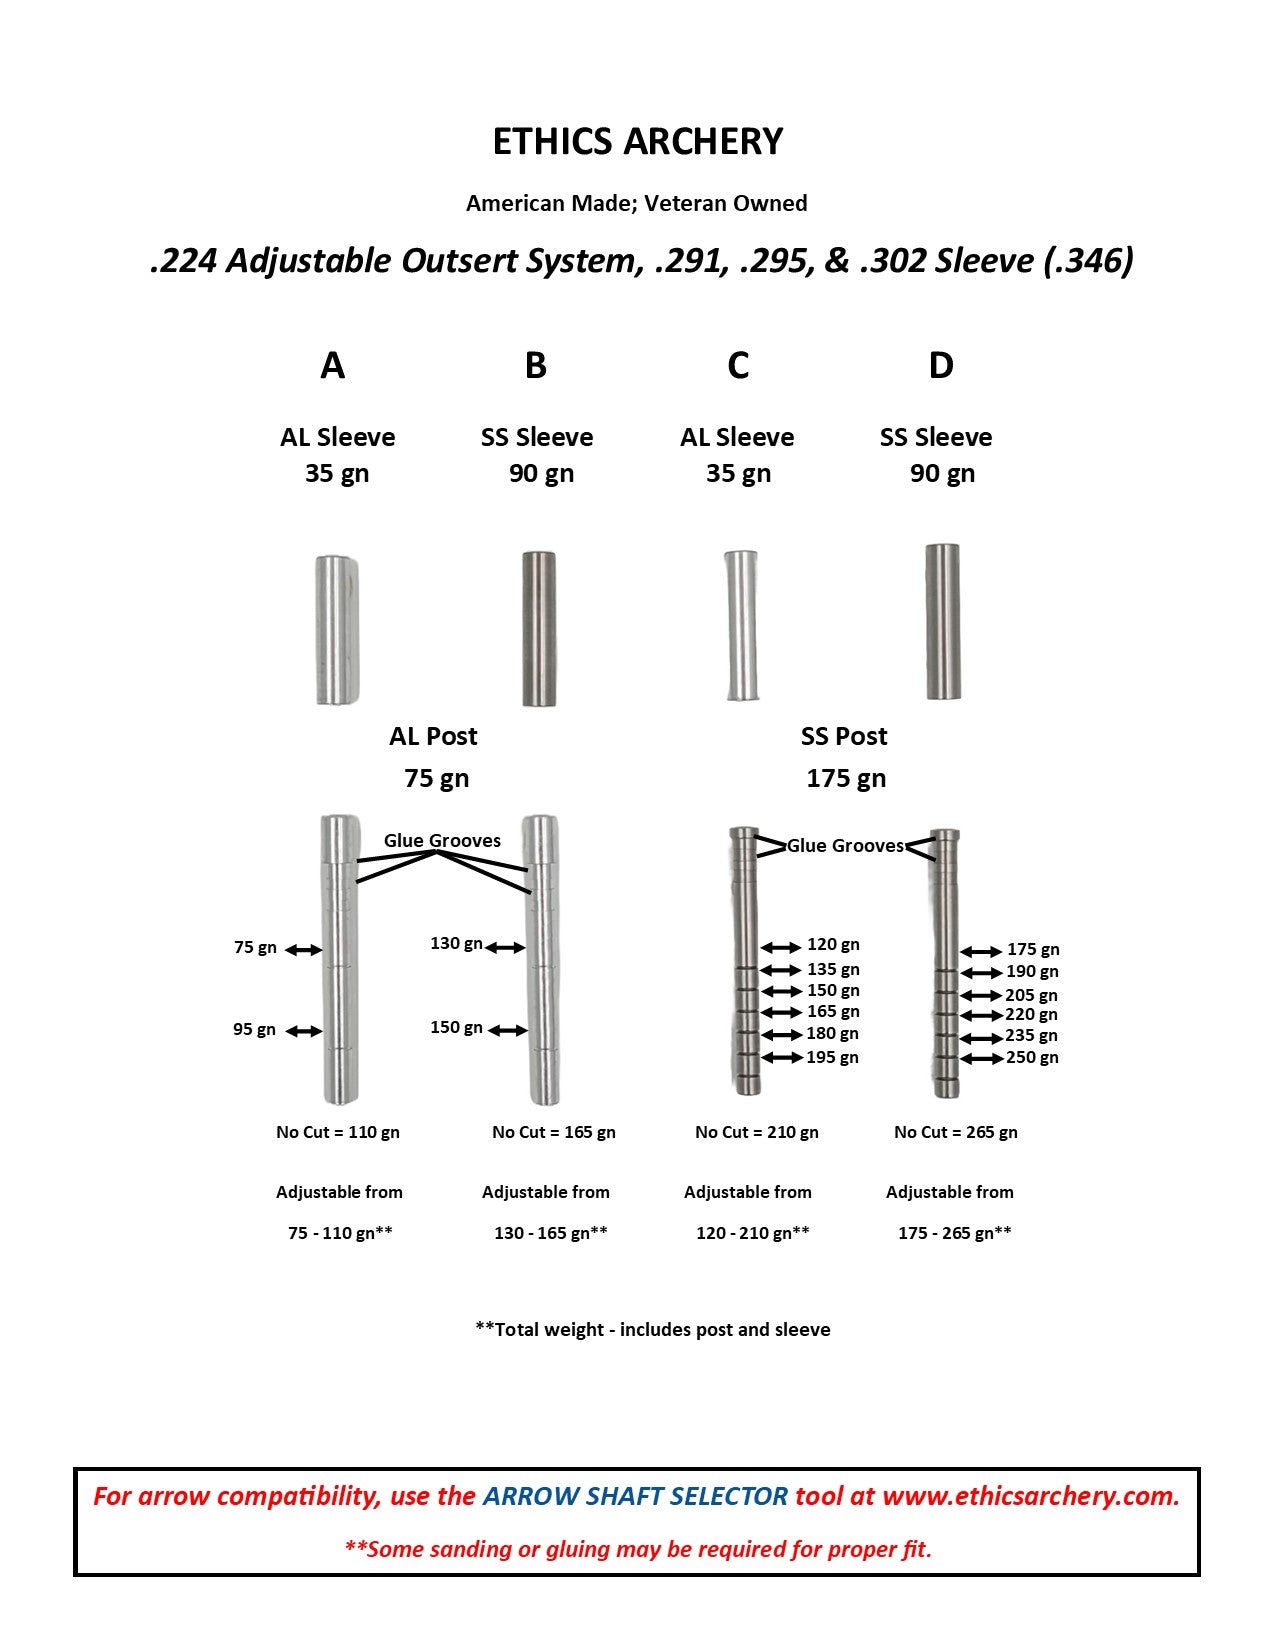 Adjustable Outsert System, .224, .302 Sleeve (.346)